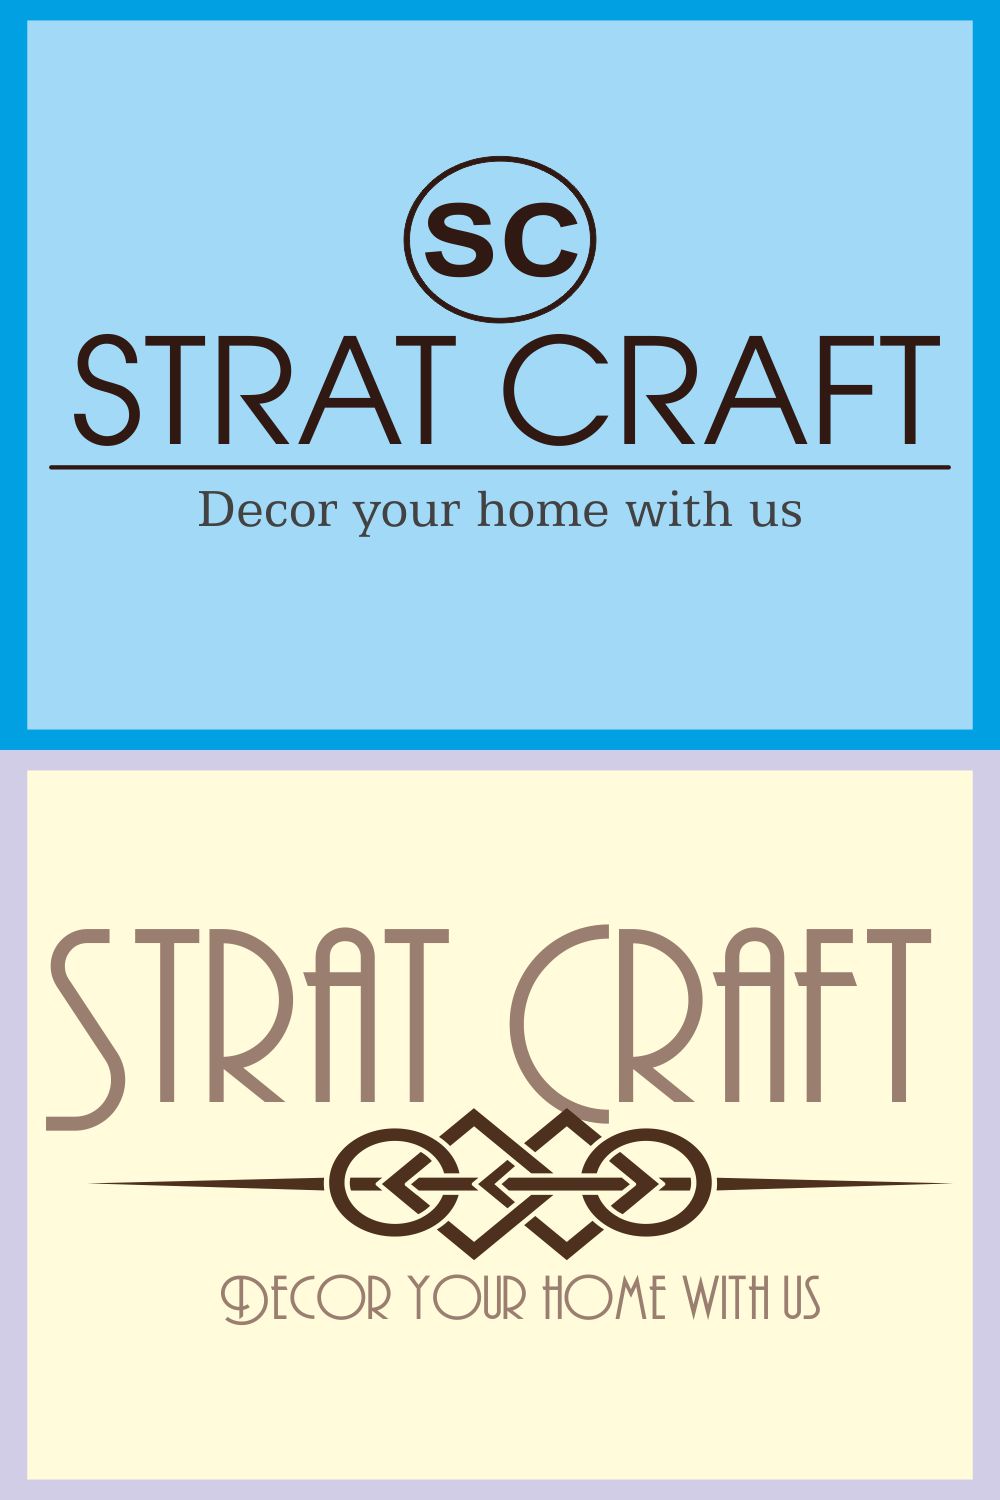 strat craft logo 676